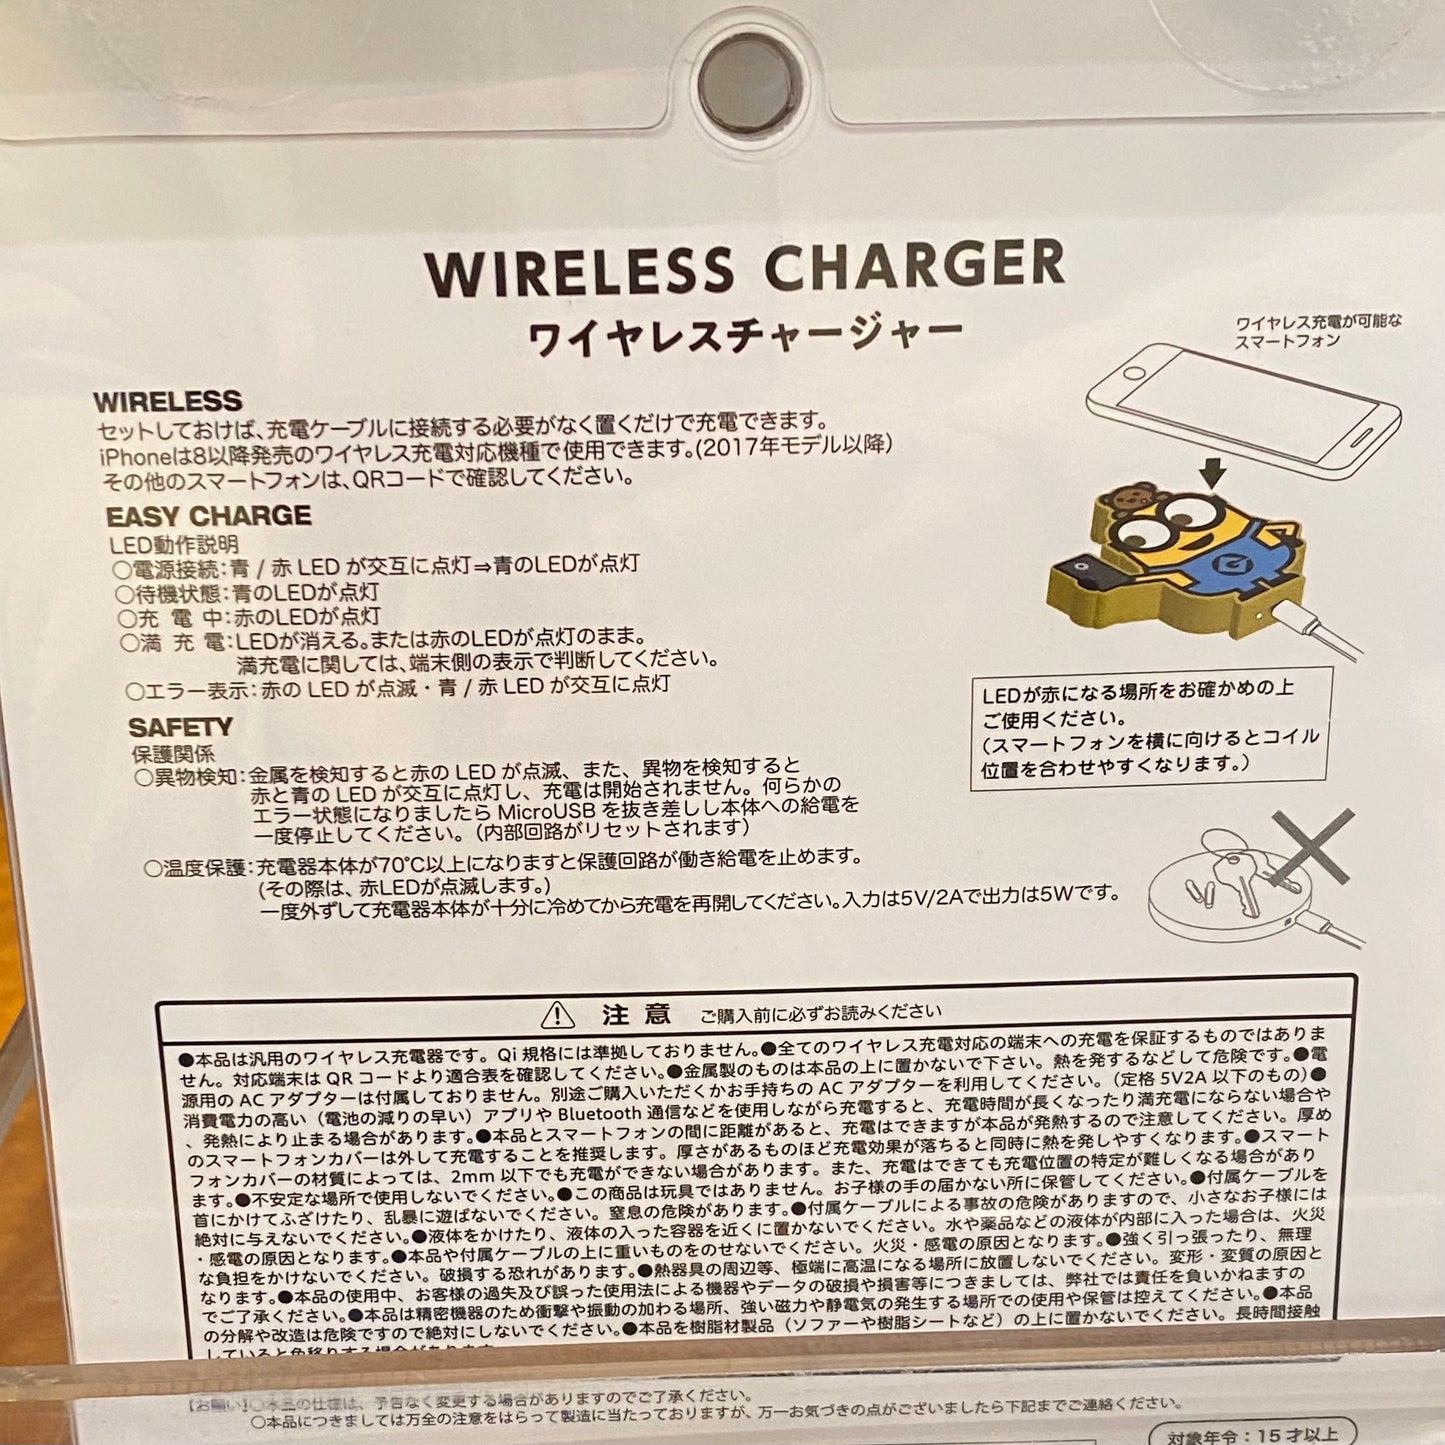 【訂貨】USJ Minions Bob & Tim Wireless Charger